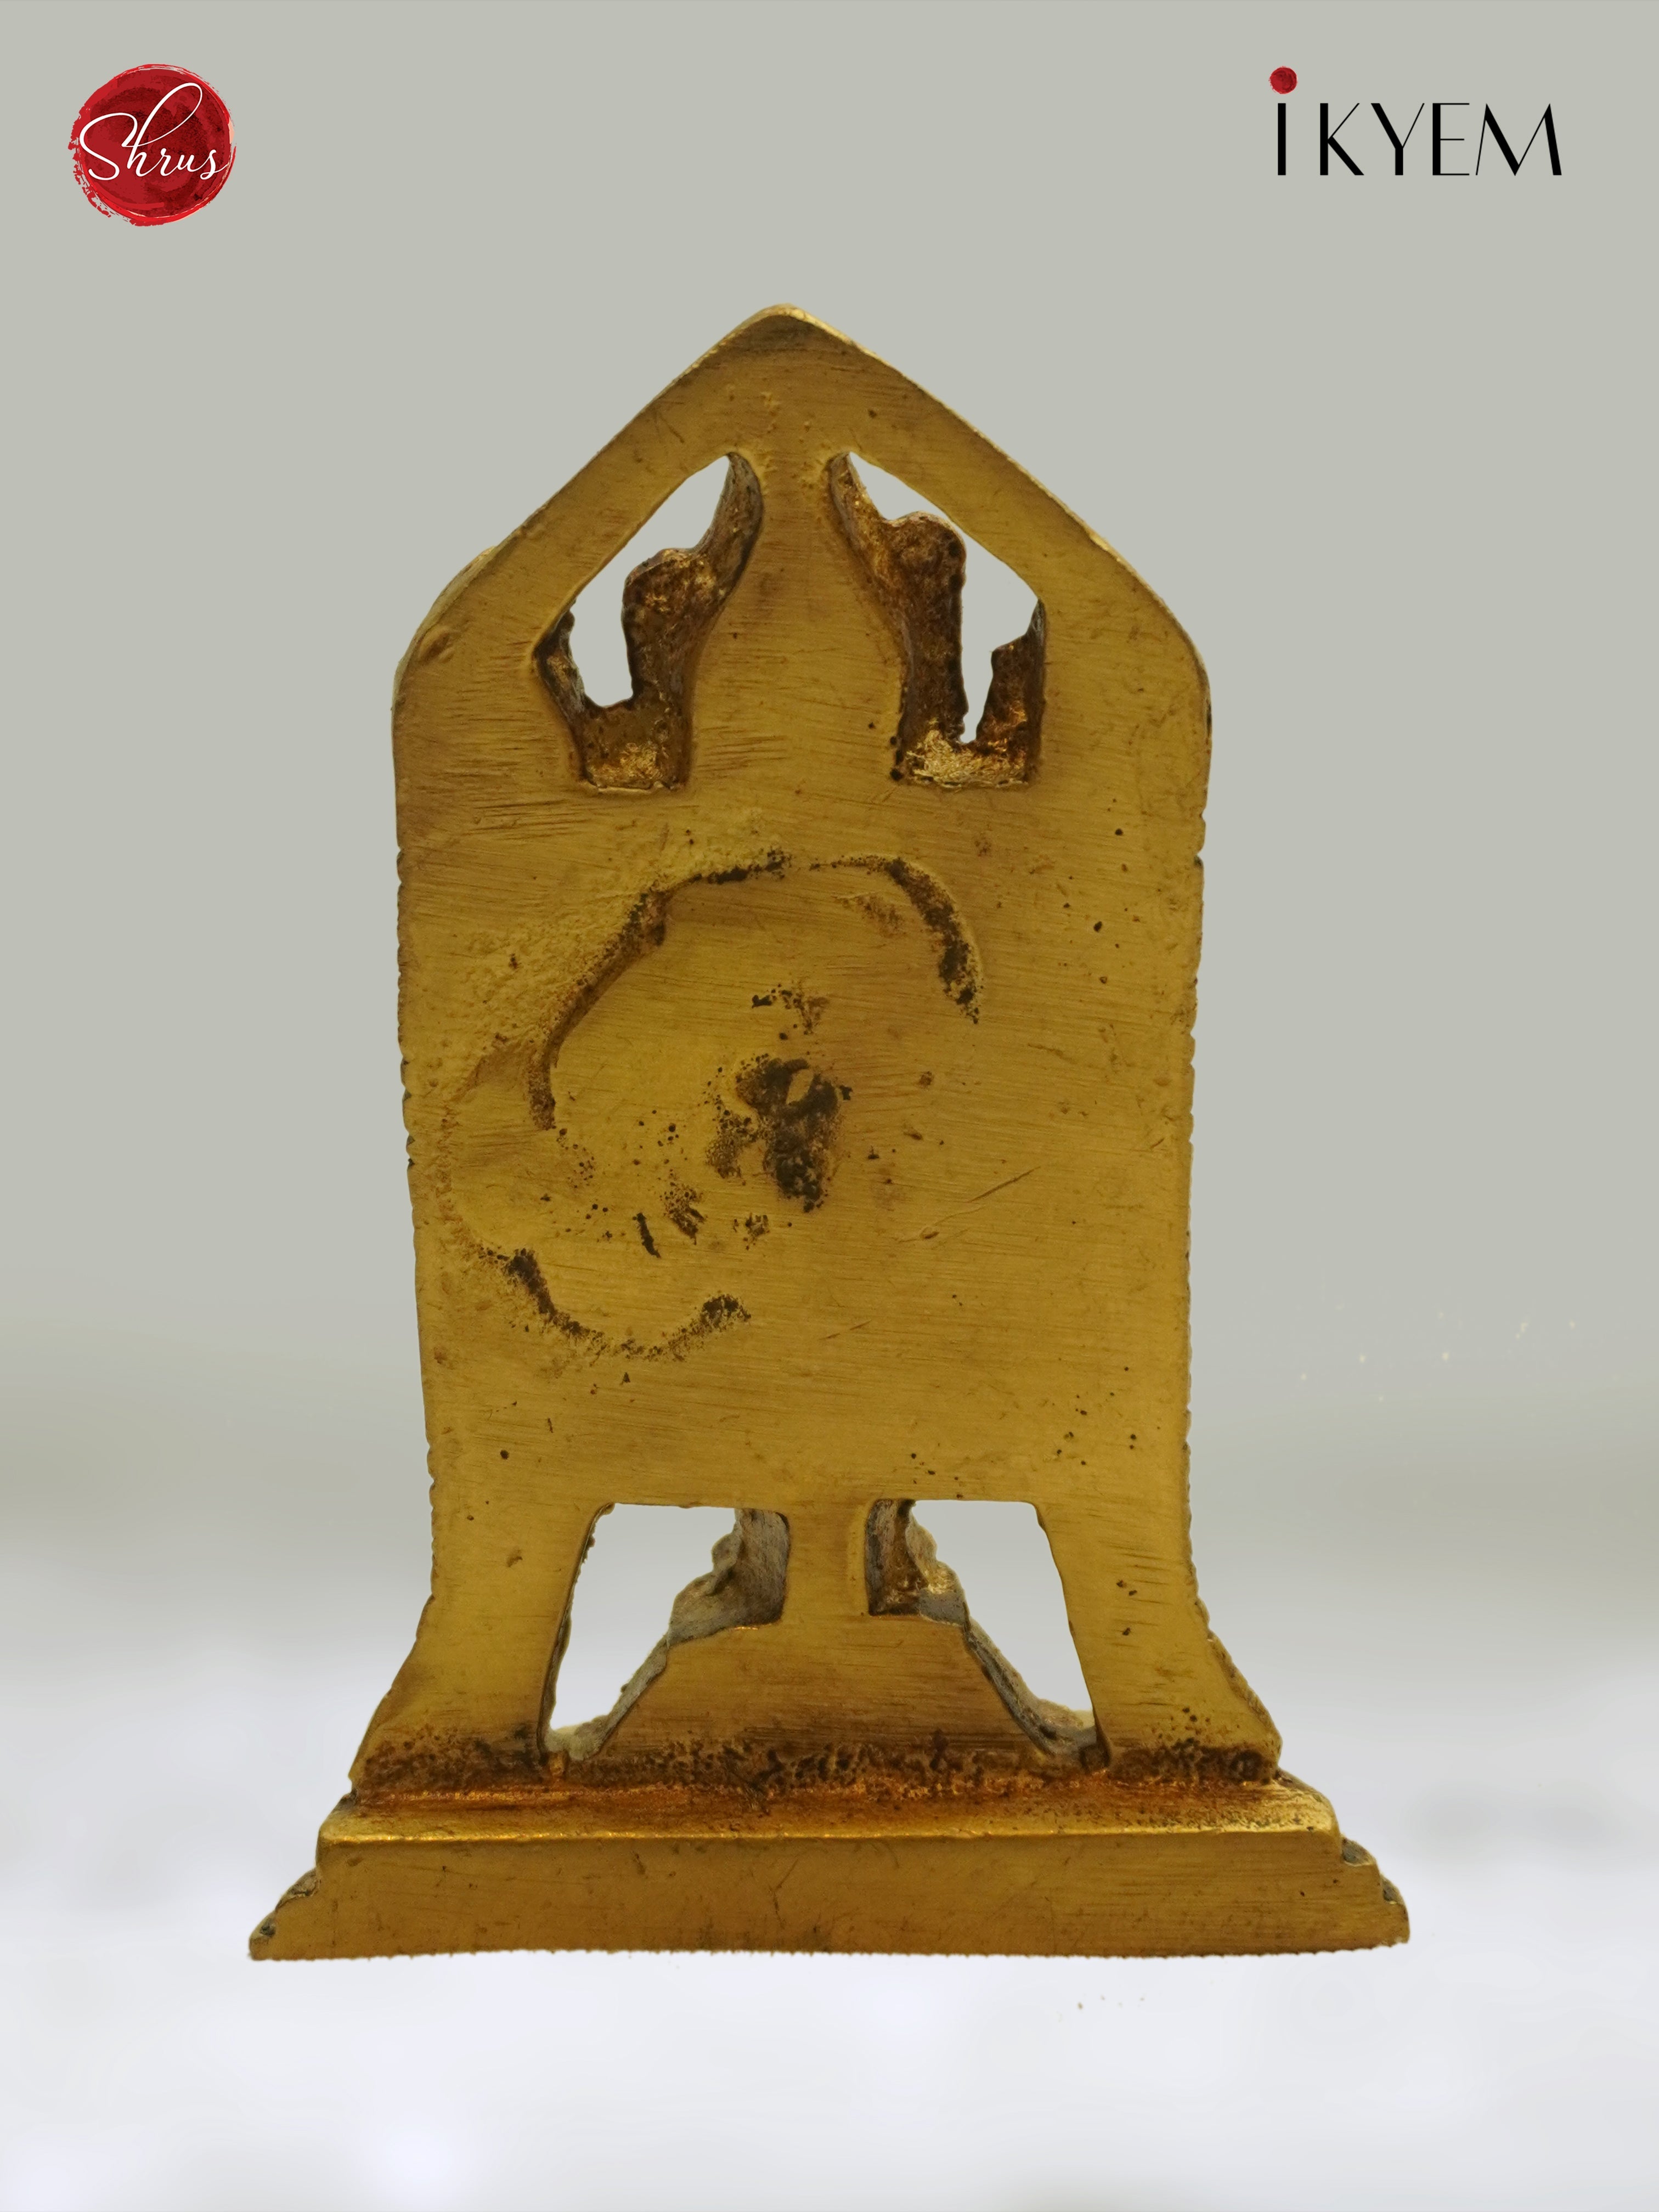 Lord Balaji Idol - Return gift